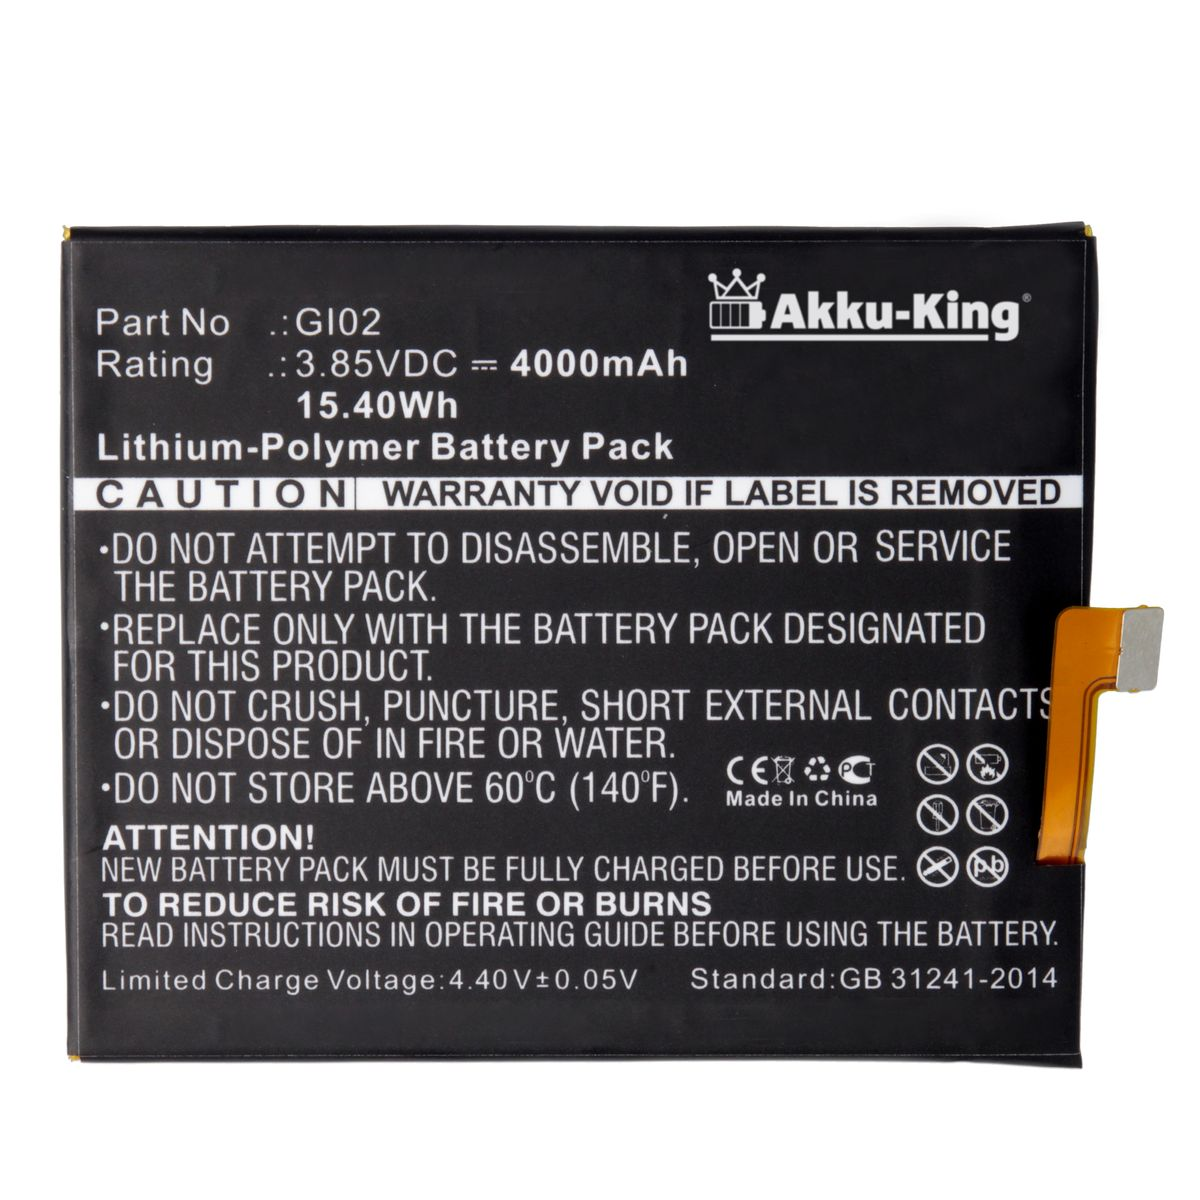 AKKU-KING Akku kompatibel mit Gigaset GI02 4000mAh 3.85 Volt, Li-Polymer Handy-Akku